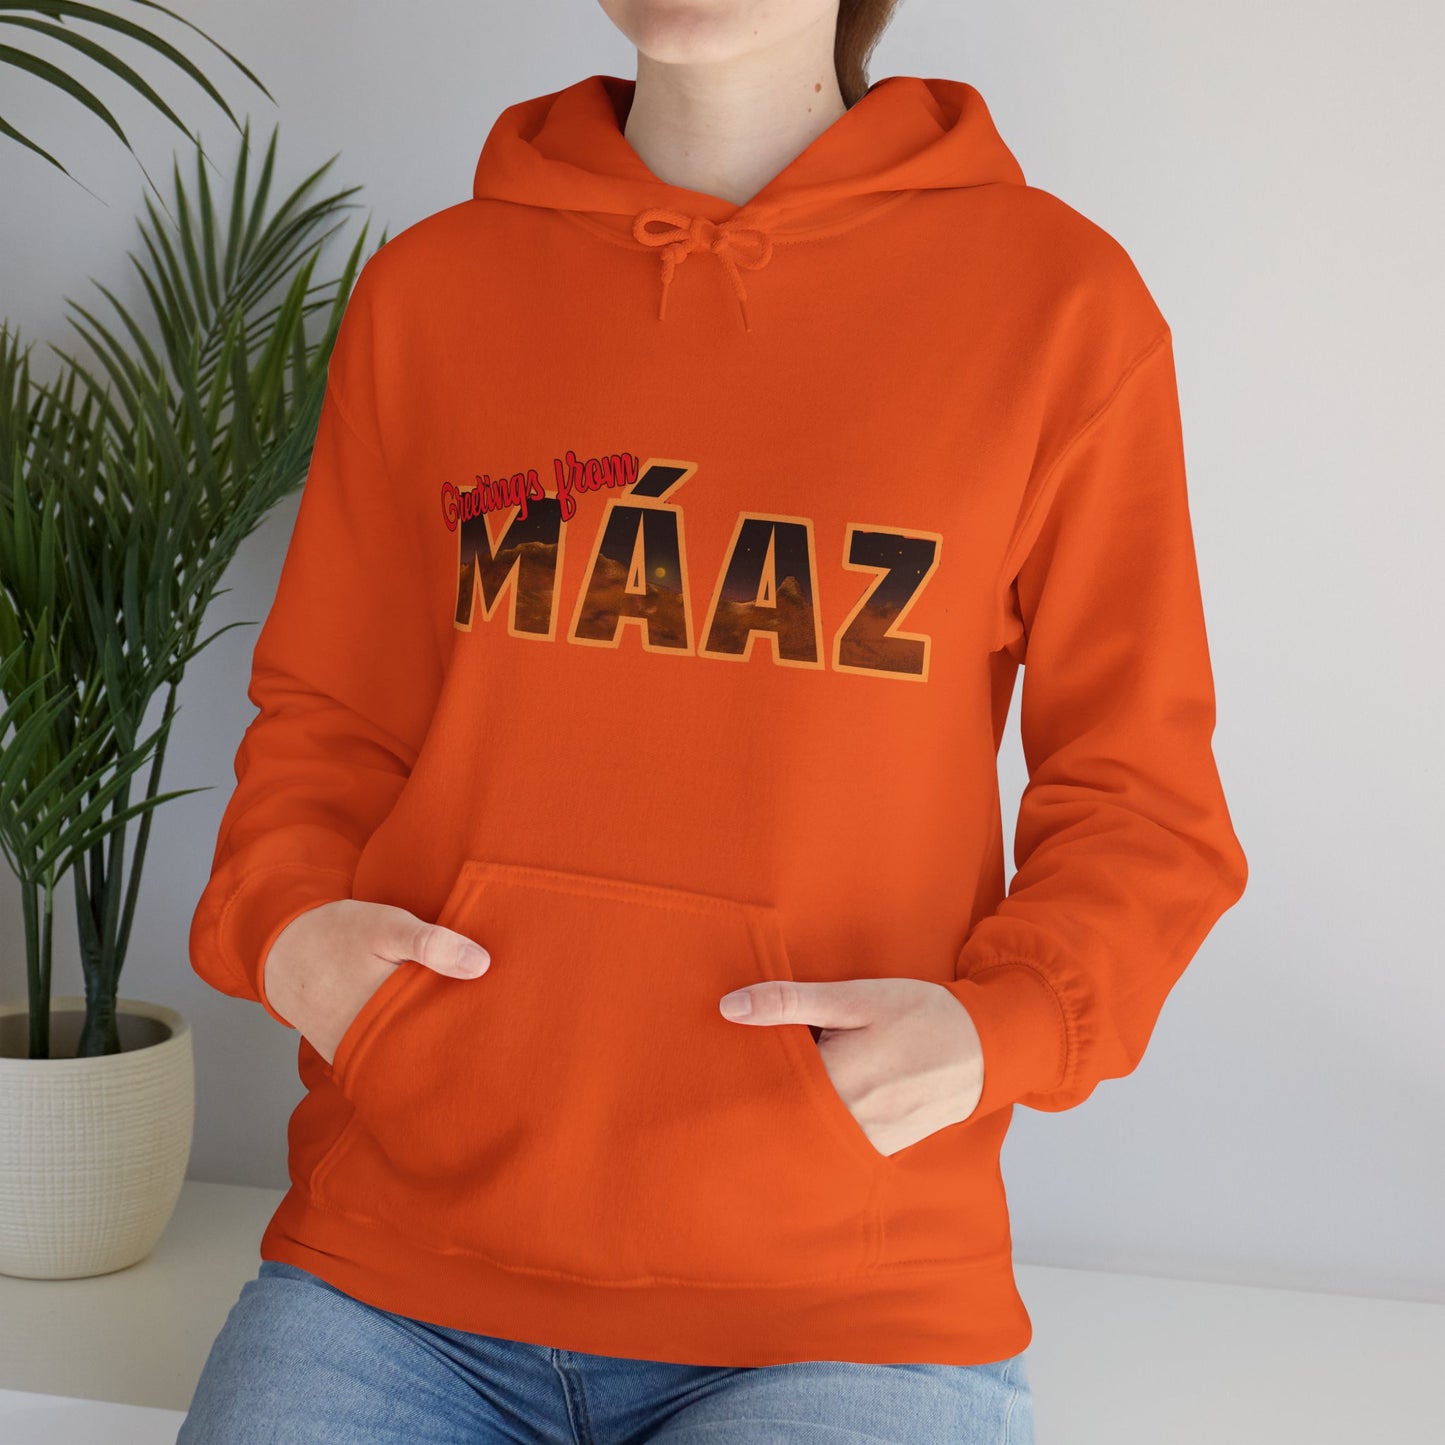 Greetings from Máaz Martians Unisex Heavy Blend Hooded Sweatshirt